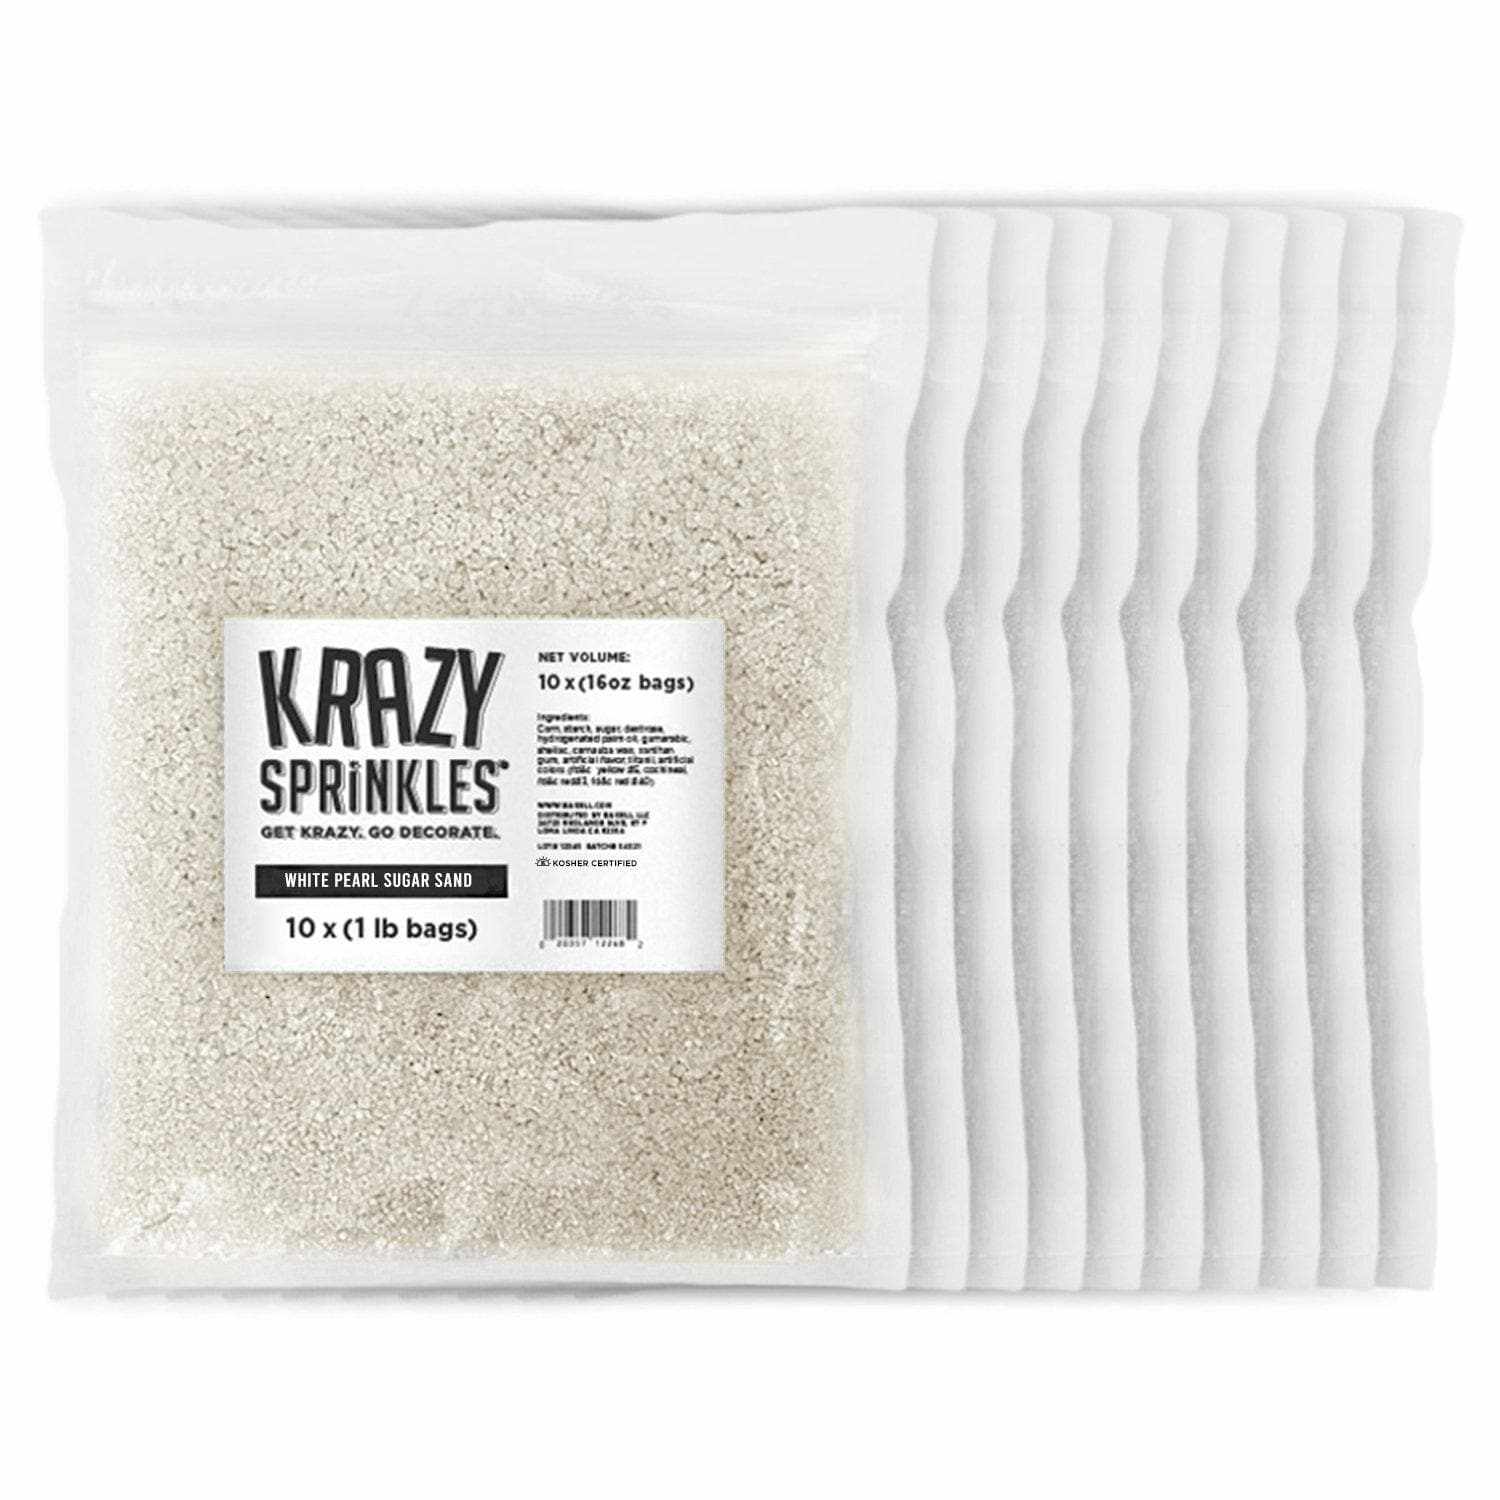 White Pearl Sugar Sand Sprinkles | Krazy Sprinkles | Bakell